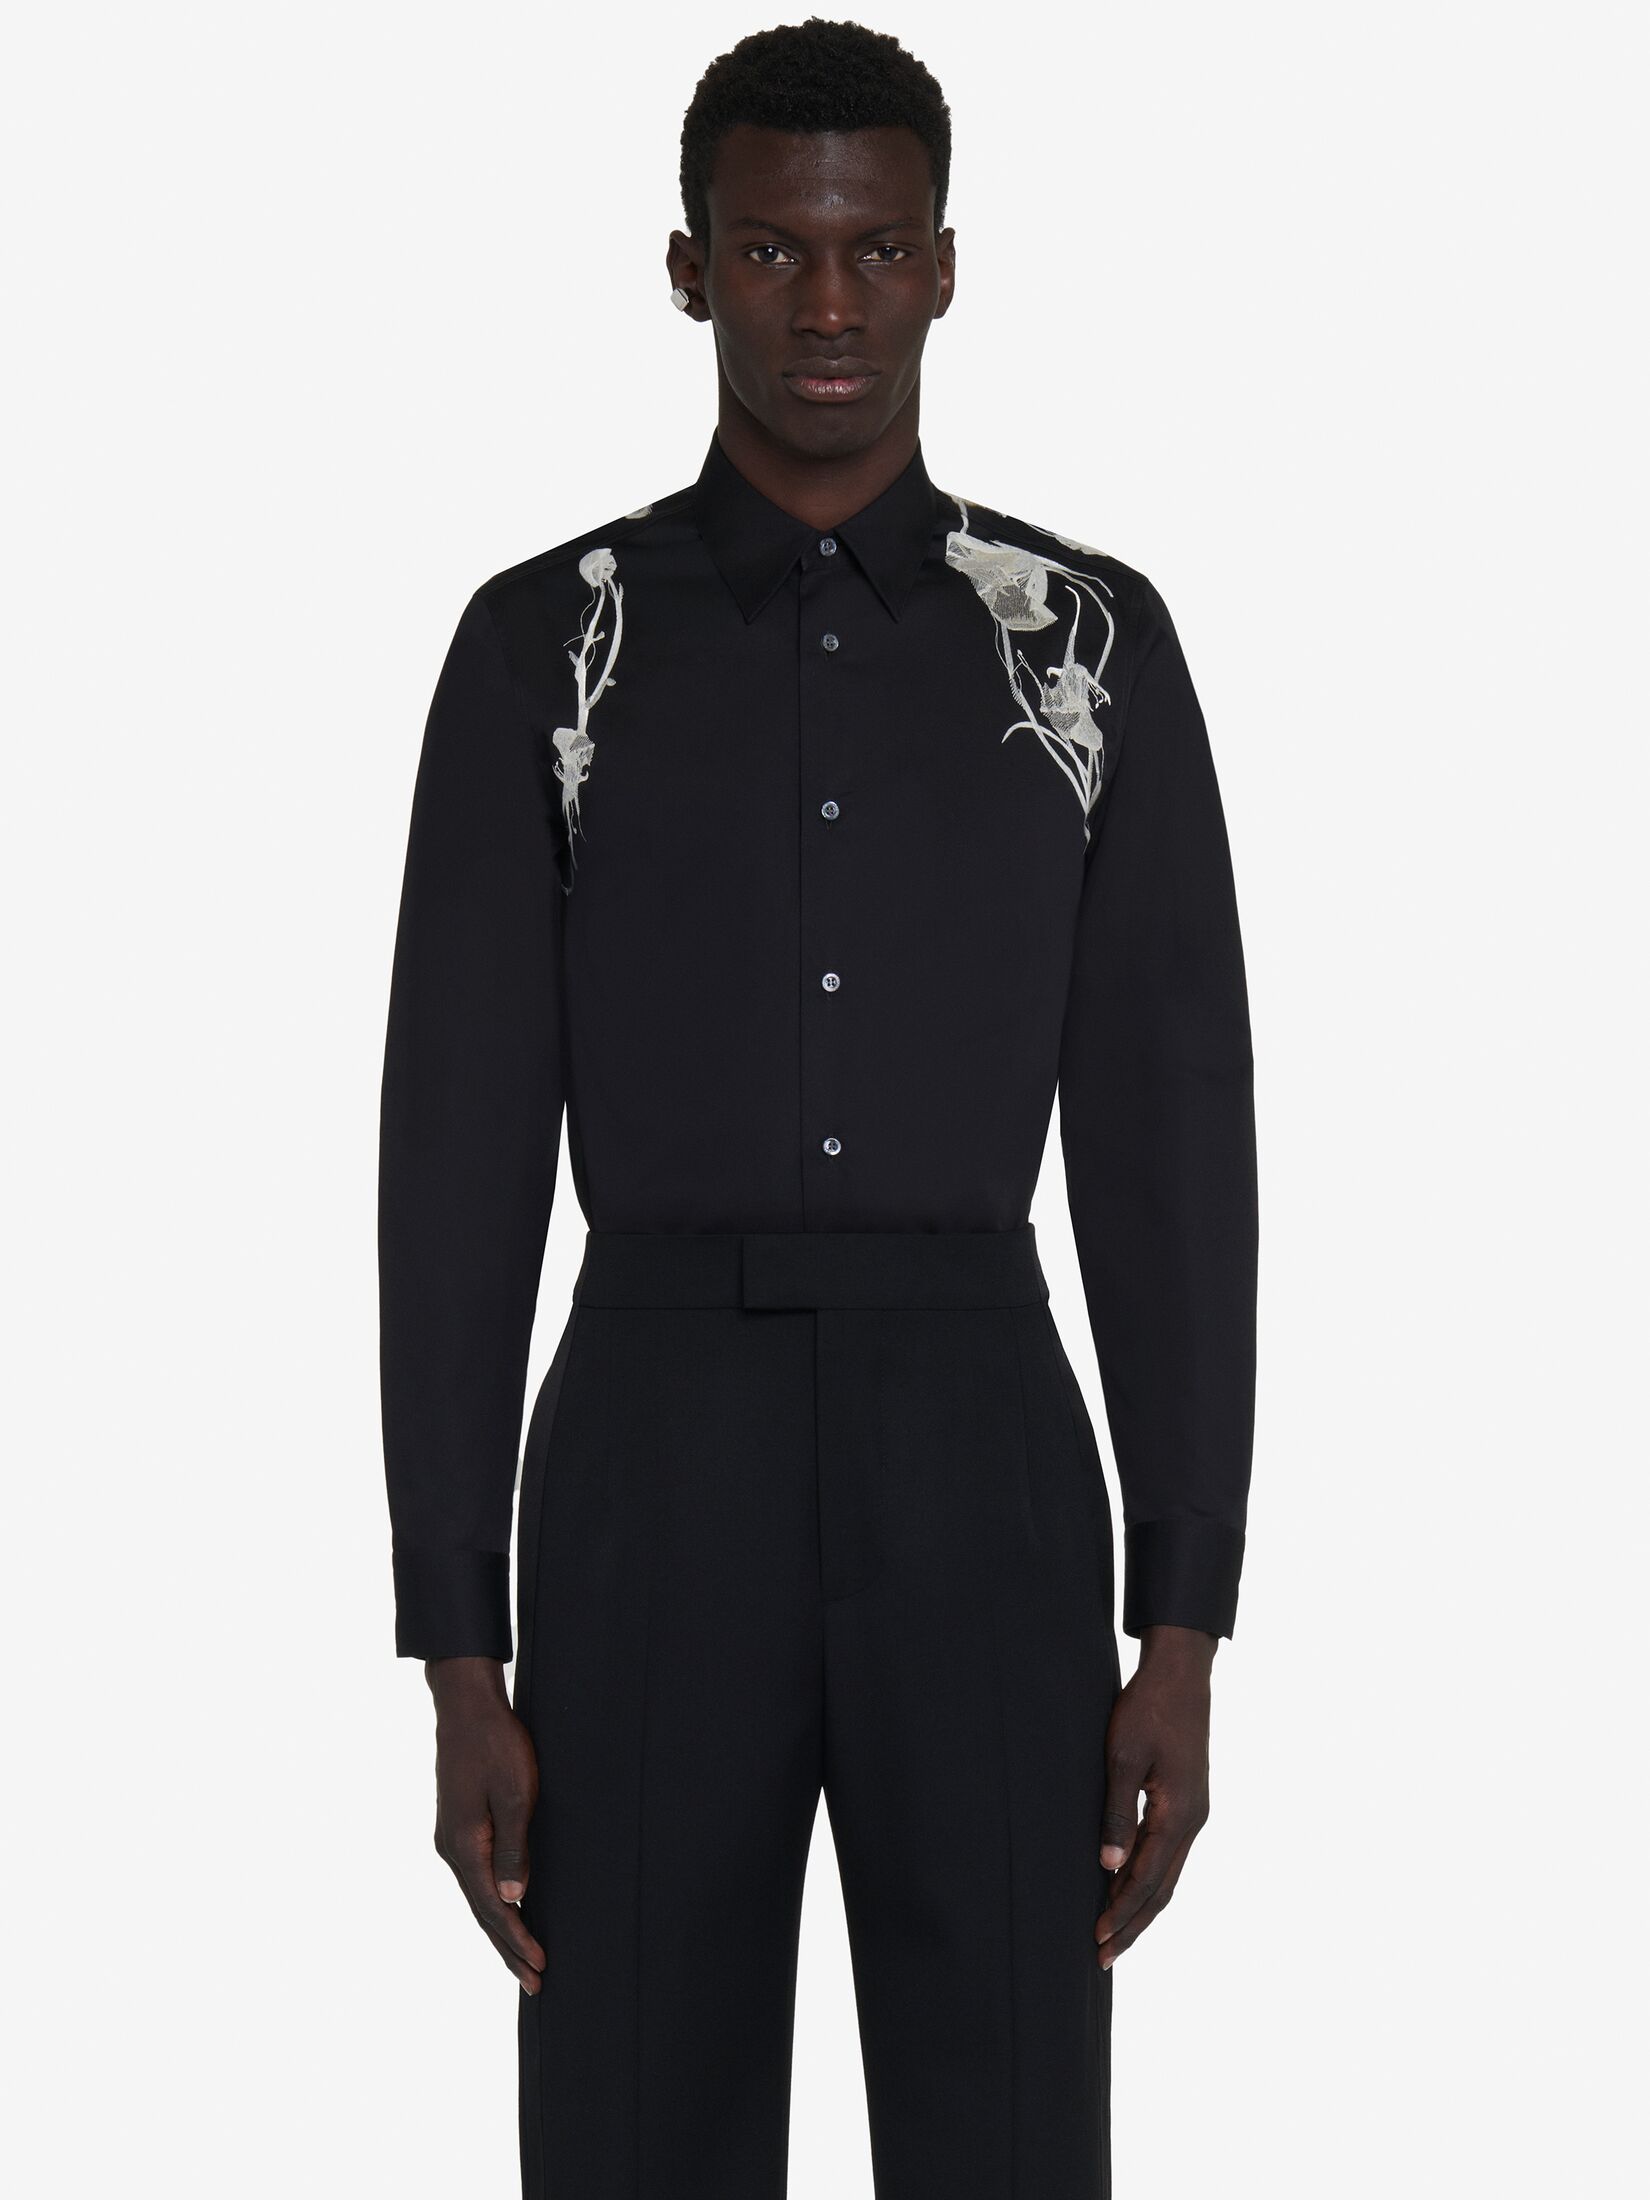 Men's Designer Clothing & Ready-To-Wear | Alexander McQueen UK